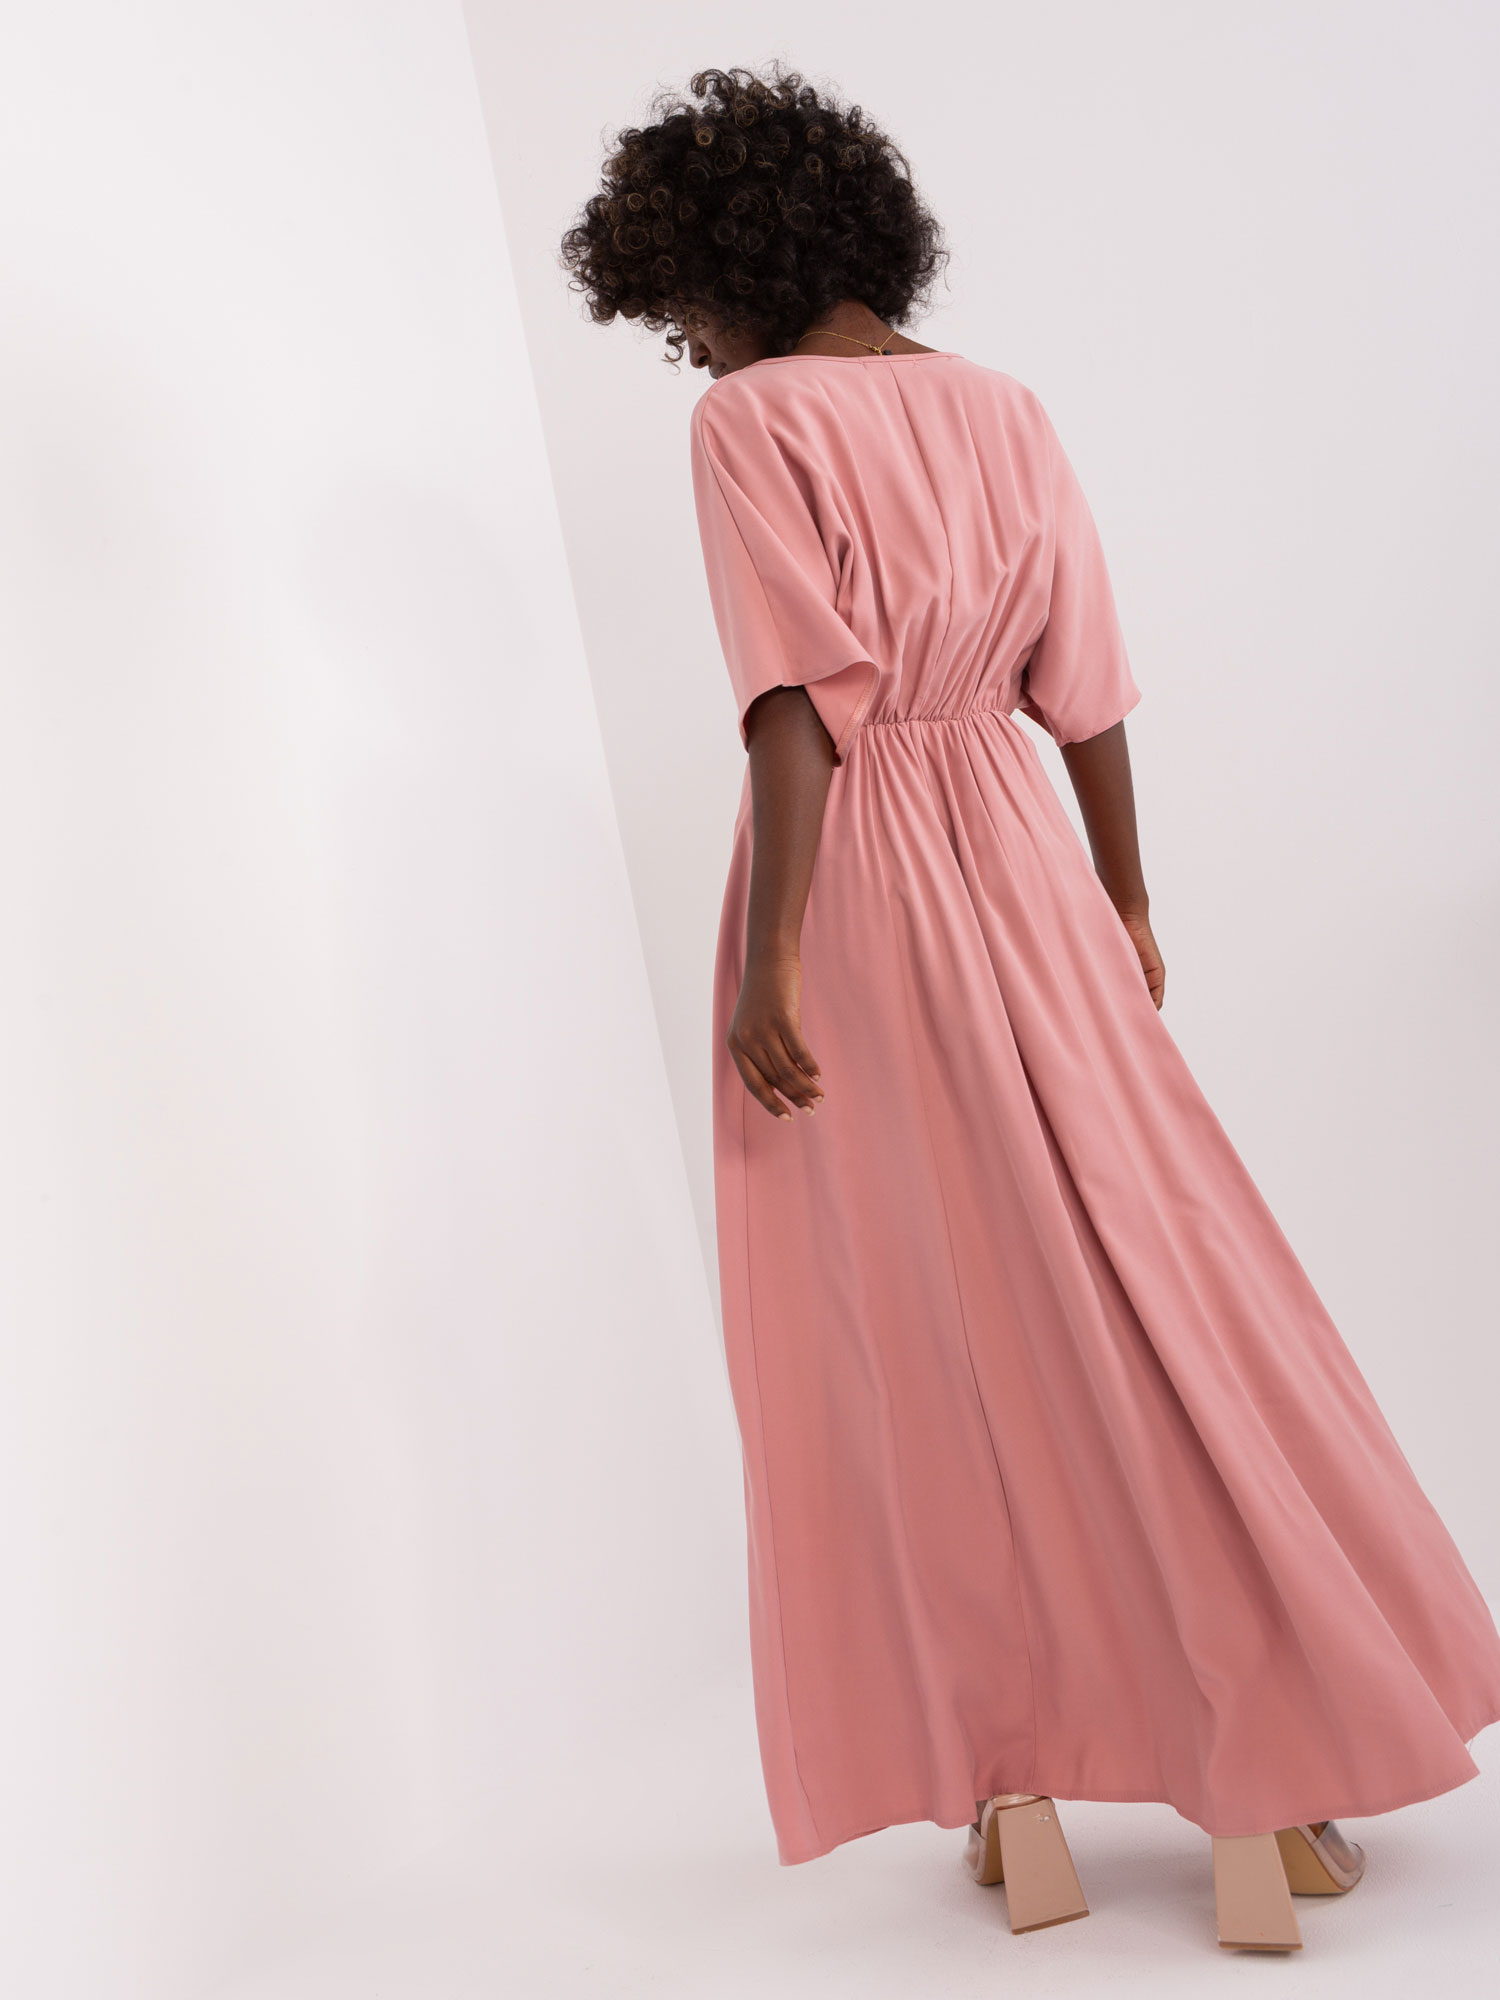 Dusty pink maxi dress with short sleeves by ZALUNA